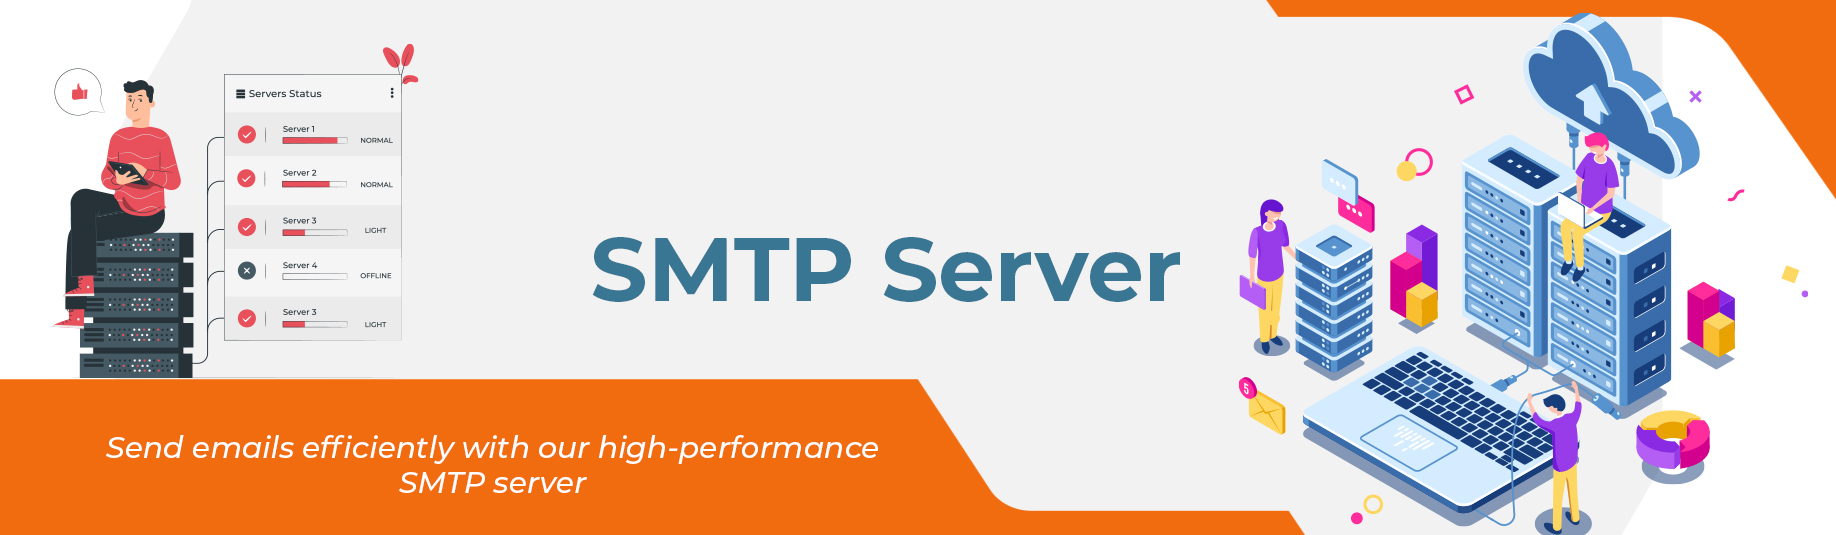 Enabling seamless communication through smtp server the internet